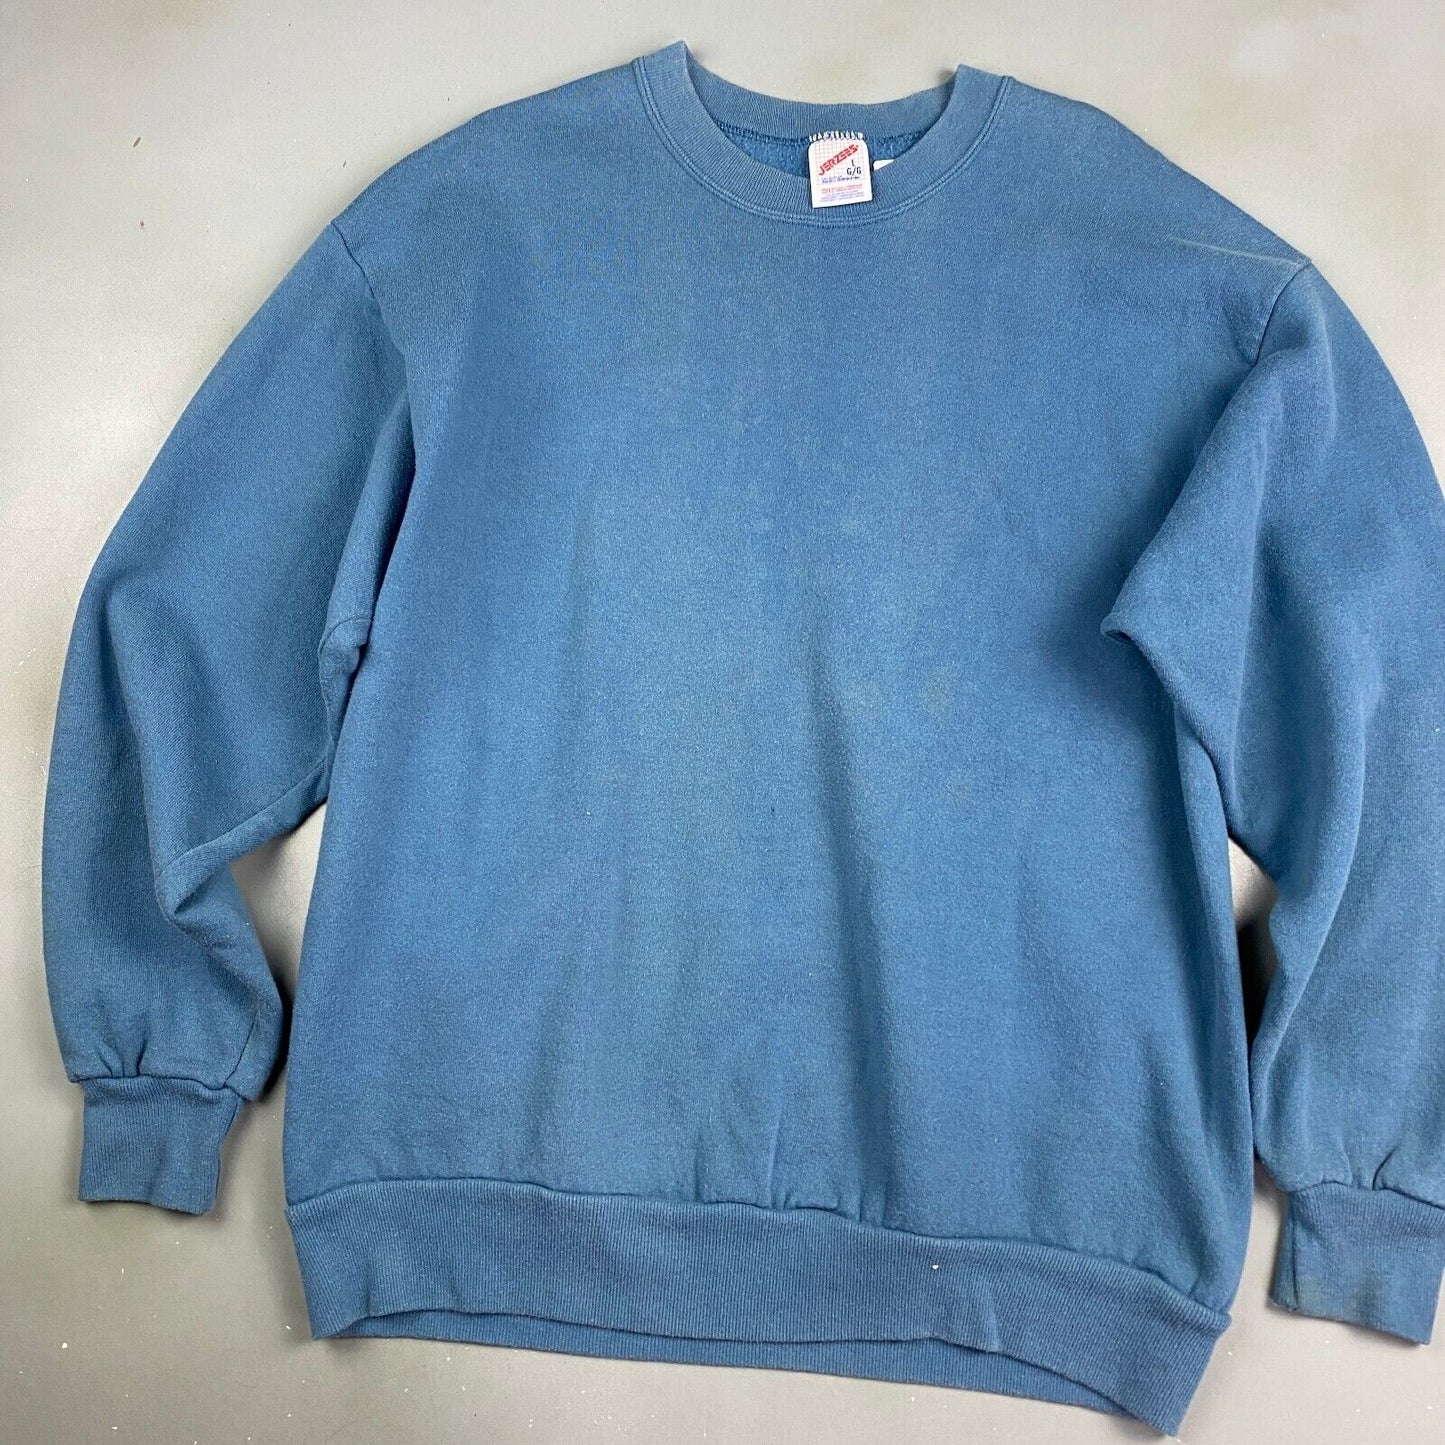 VINTAGE 90s Faded Blue Blank Crewneck Jerzees Sweater sz Large Adult